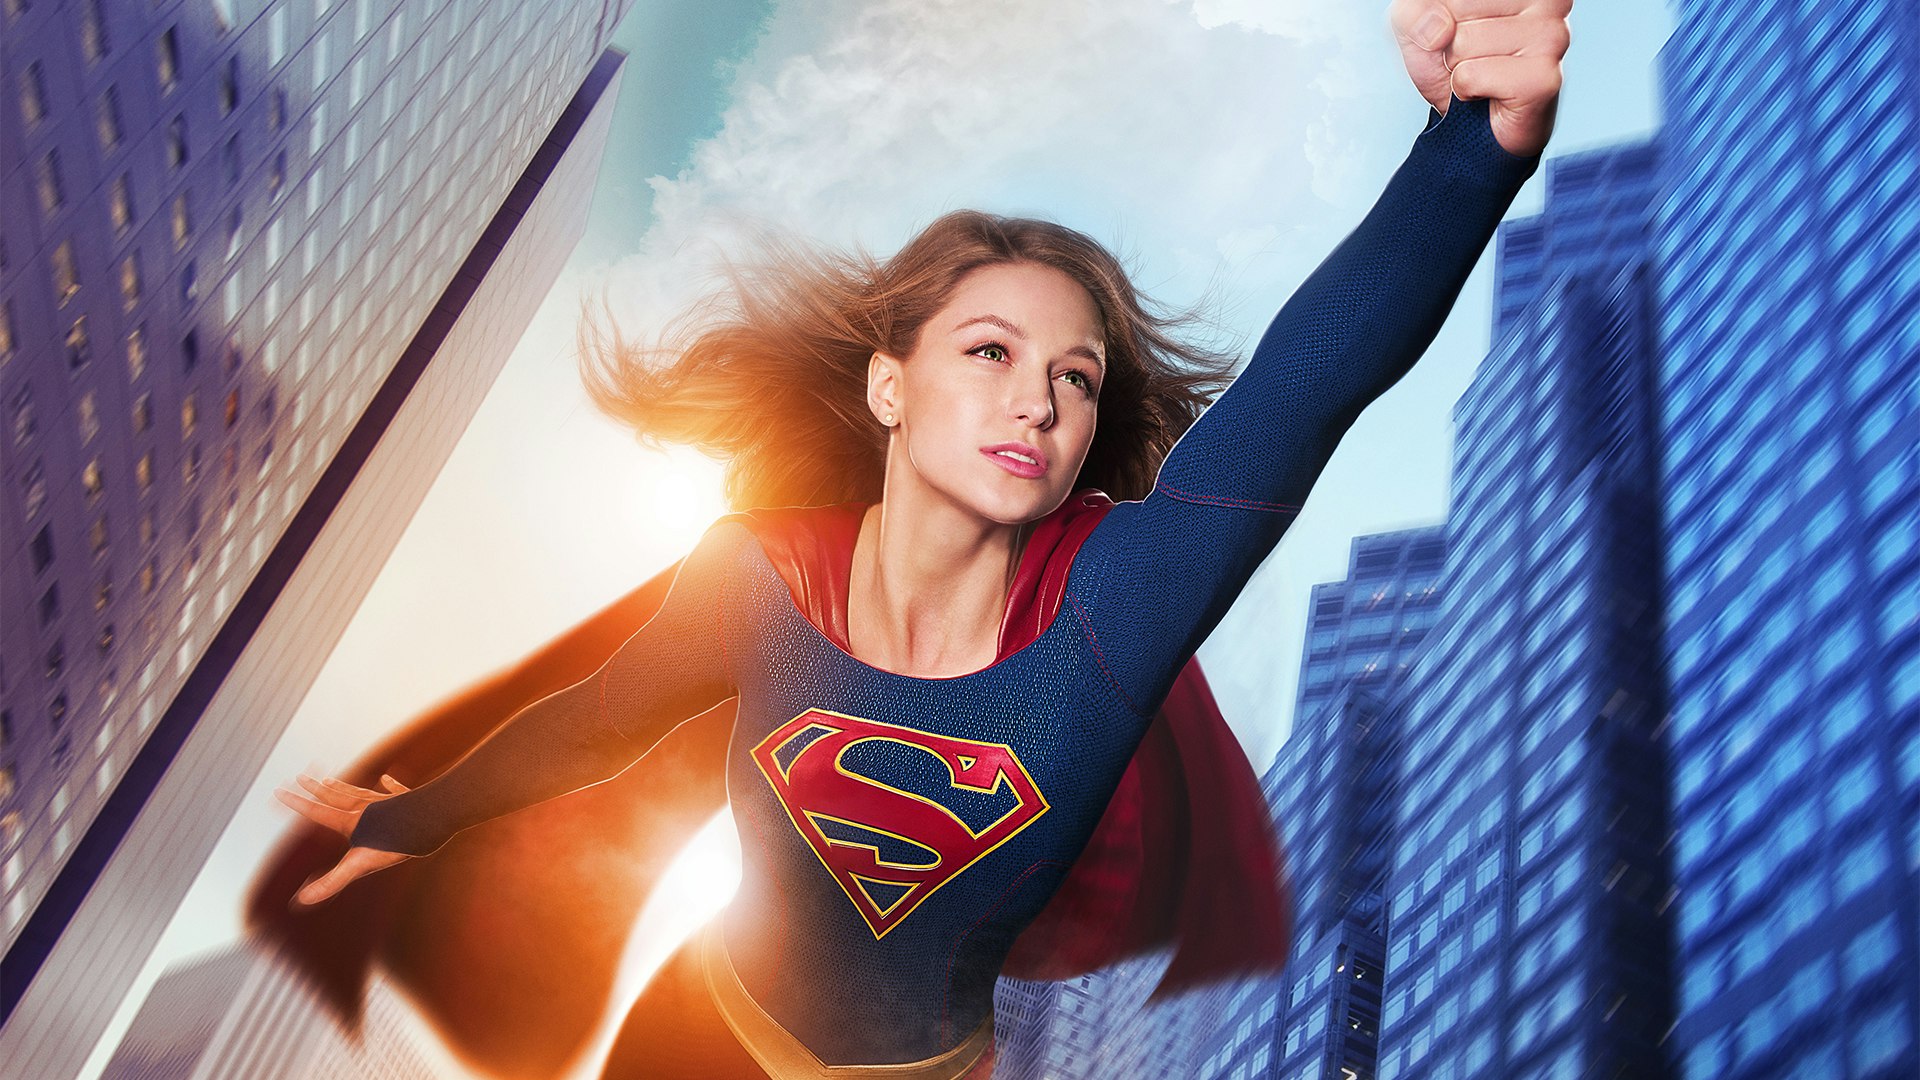 catie peckham recommends supergirl full movie online pic